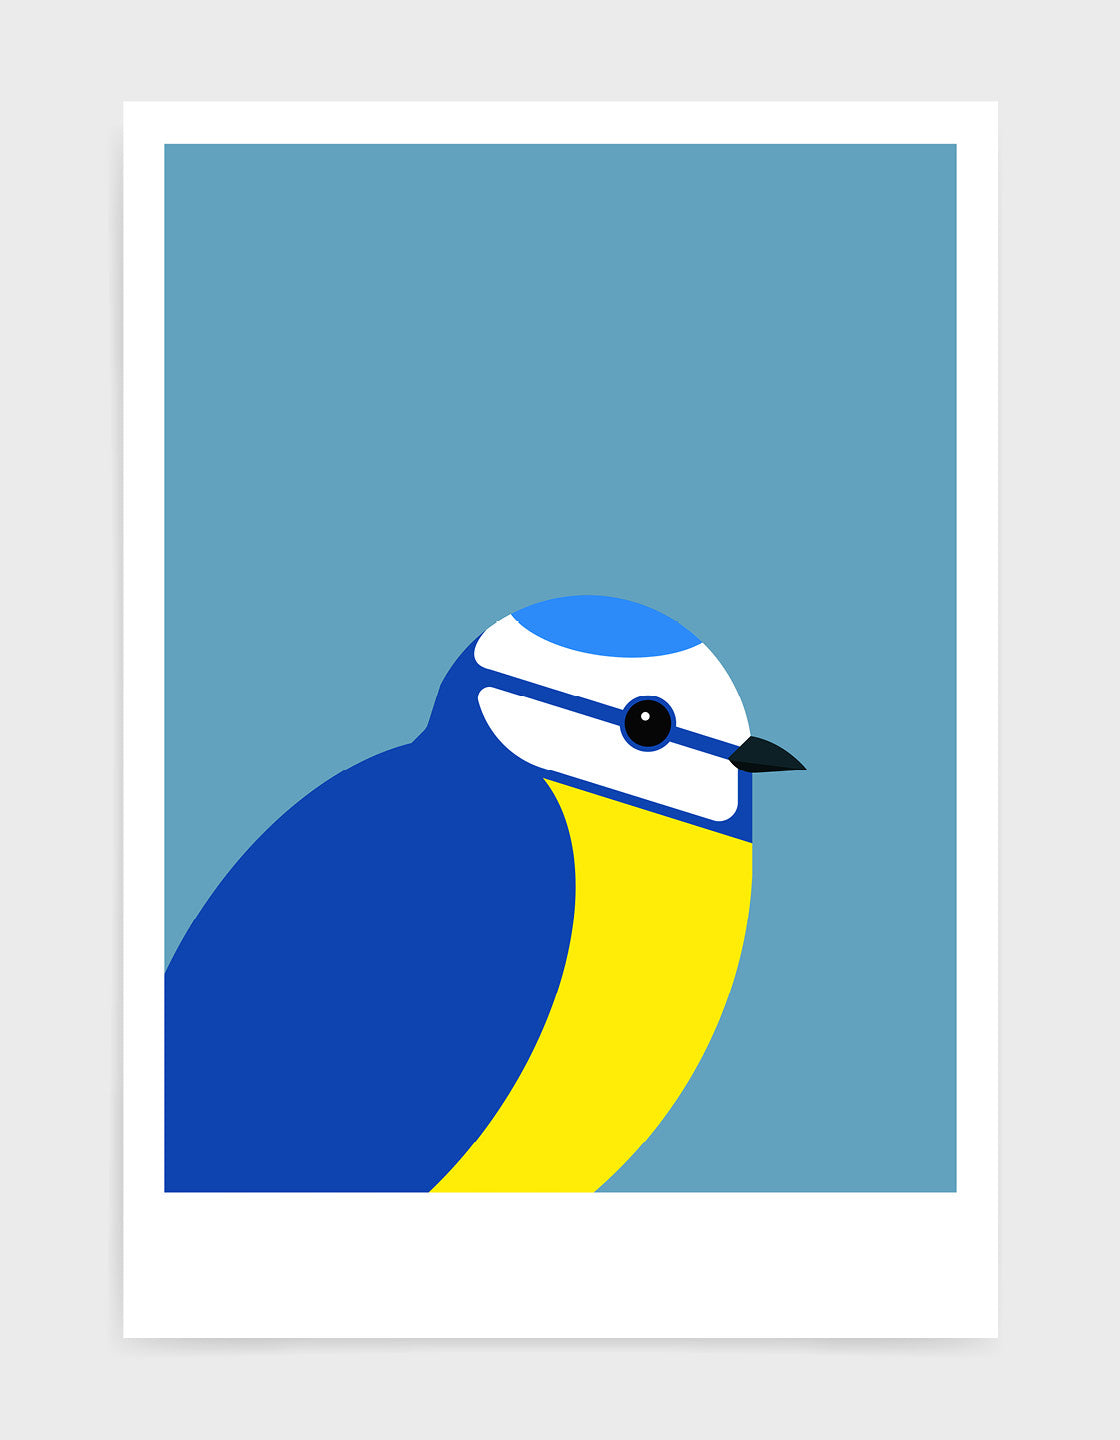 modern illustration of a blue tit bird against a sky blue background